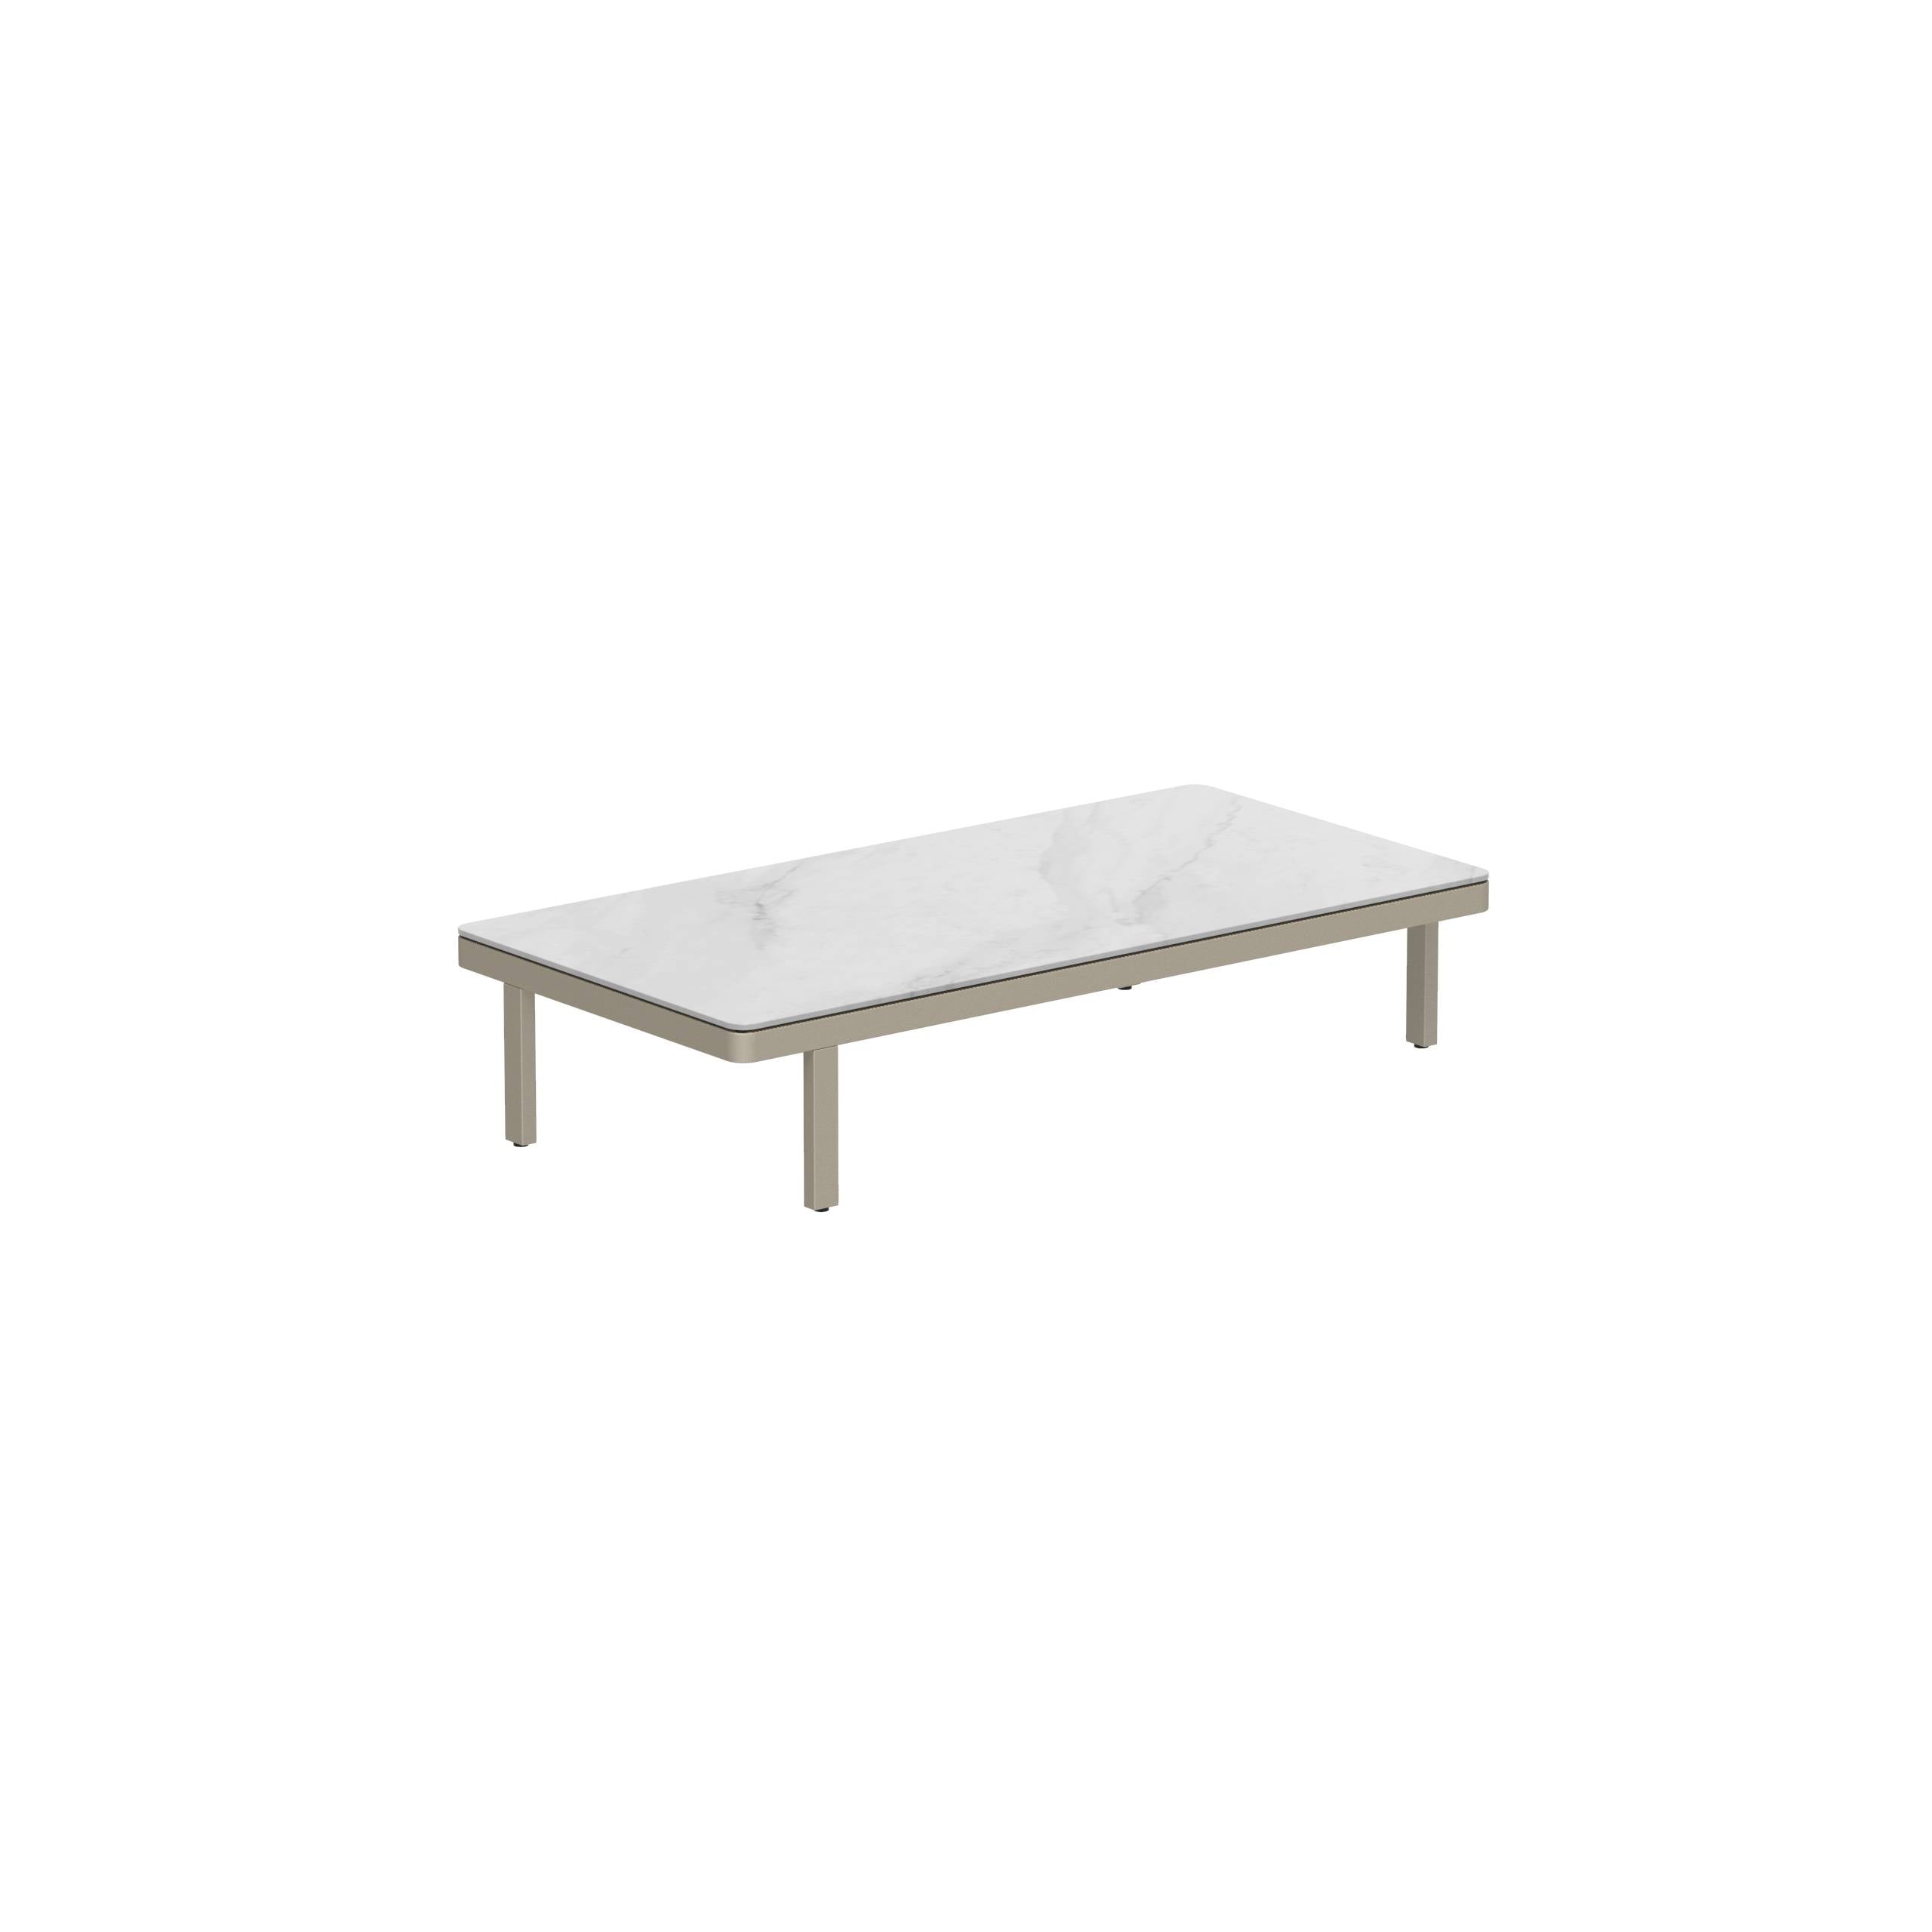 Alura Lounge 160 Lth Table 160x80x34cm Sand Ceramic Tabletop Bianco Statuario